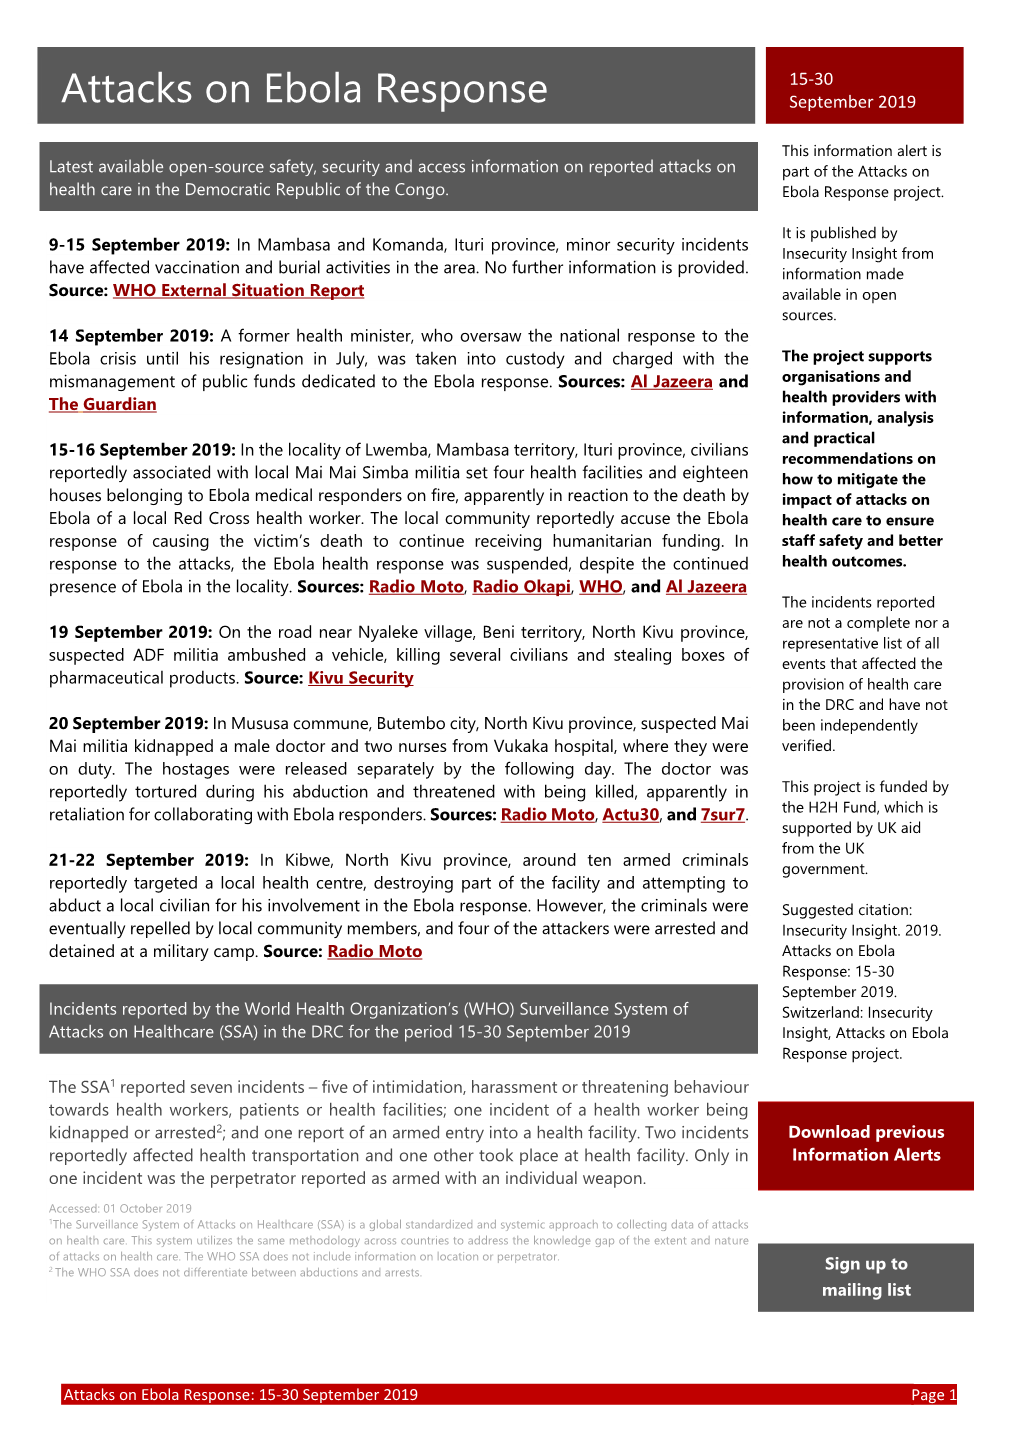 Attacks on Ebola Response September 2019